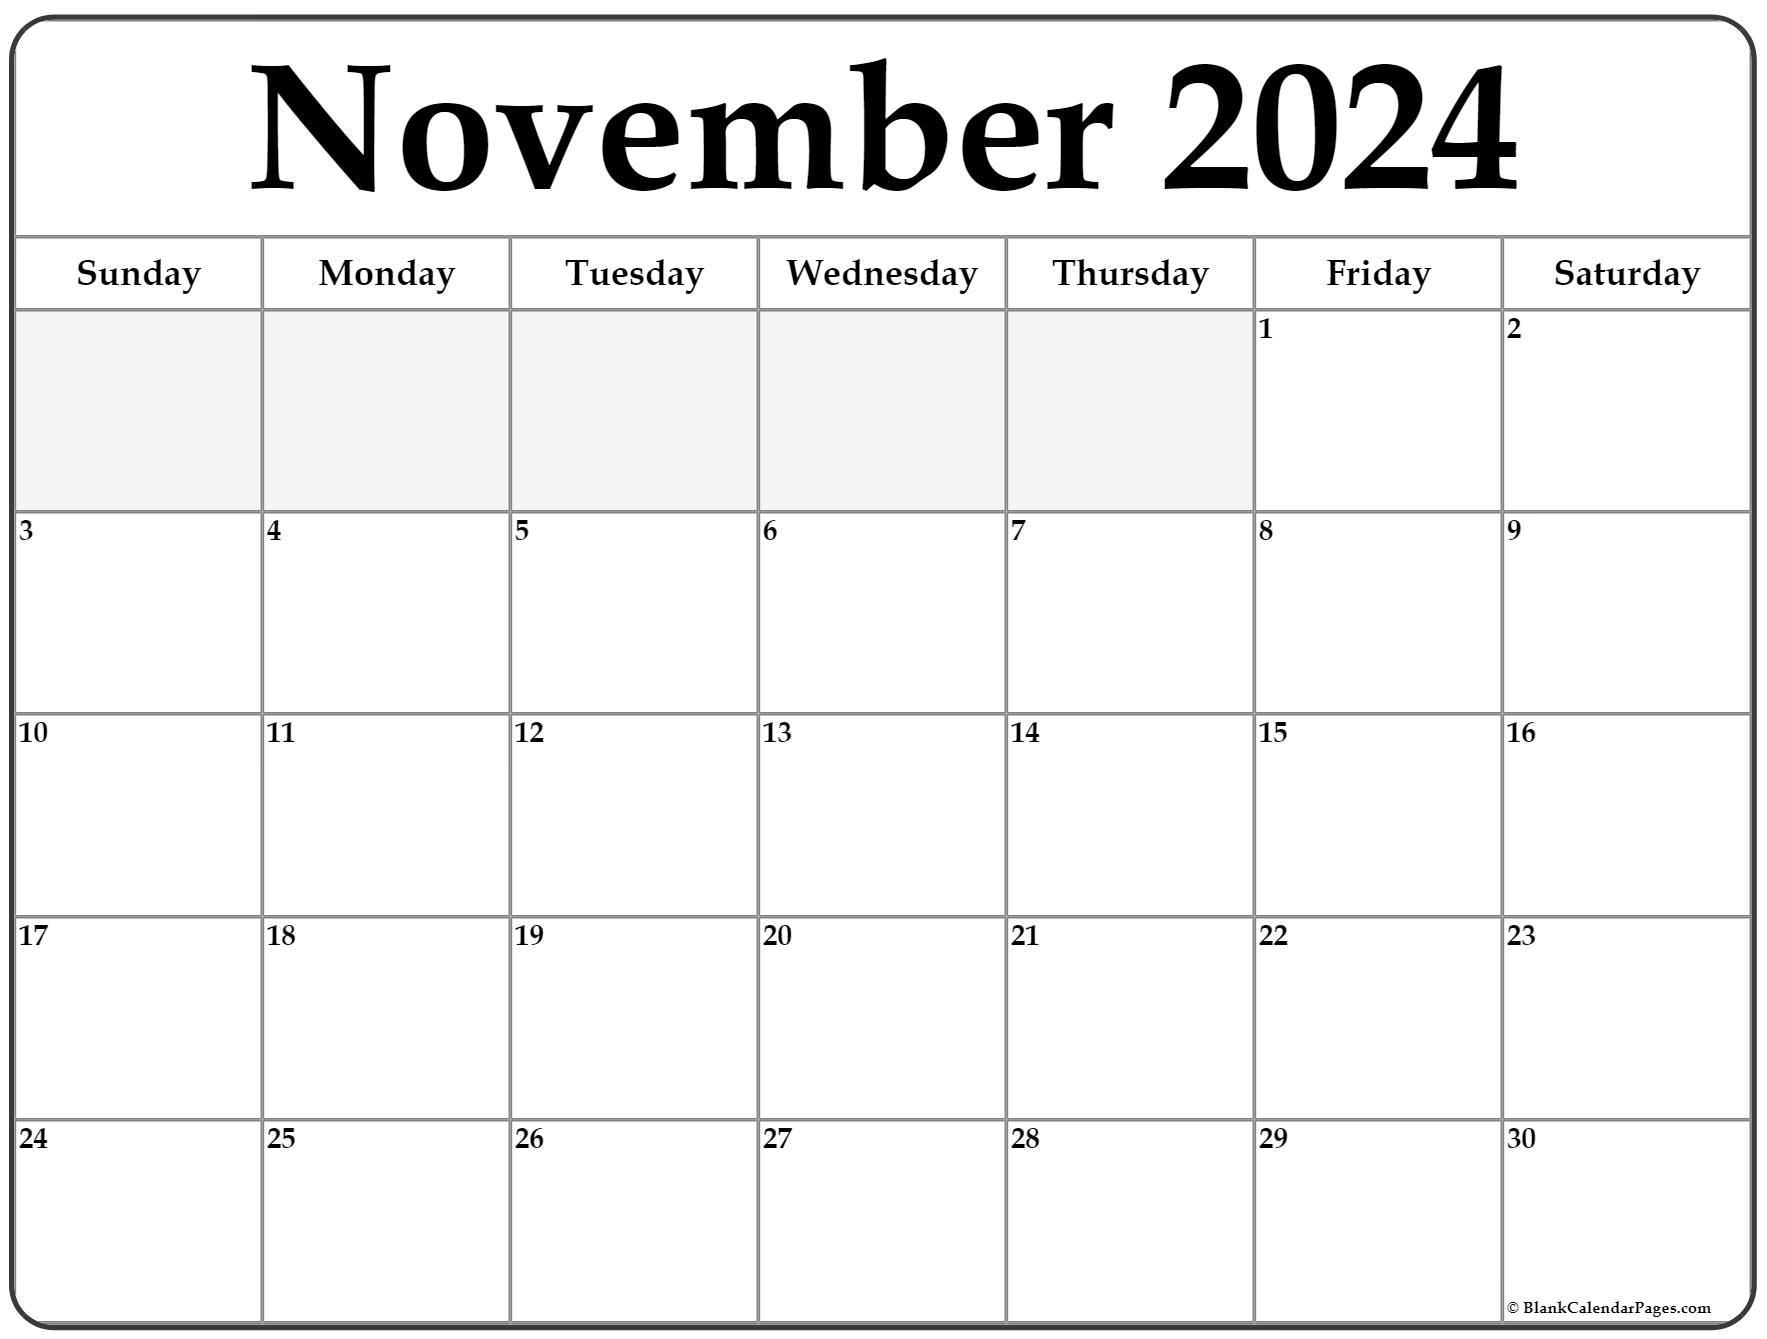 Monthly Calendar 2022 November November 2022 Calendar | Free Printable Calendar Templates